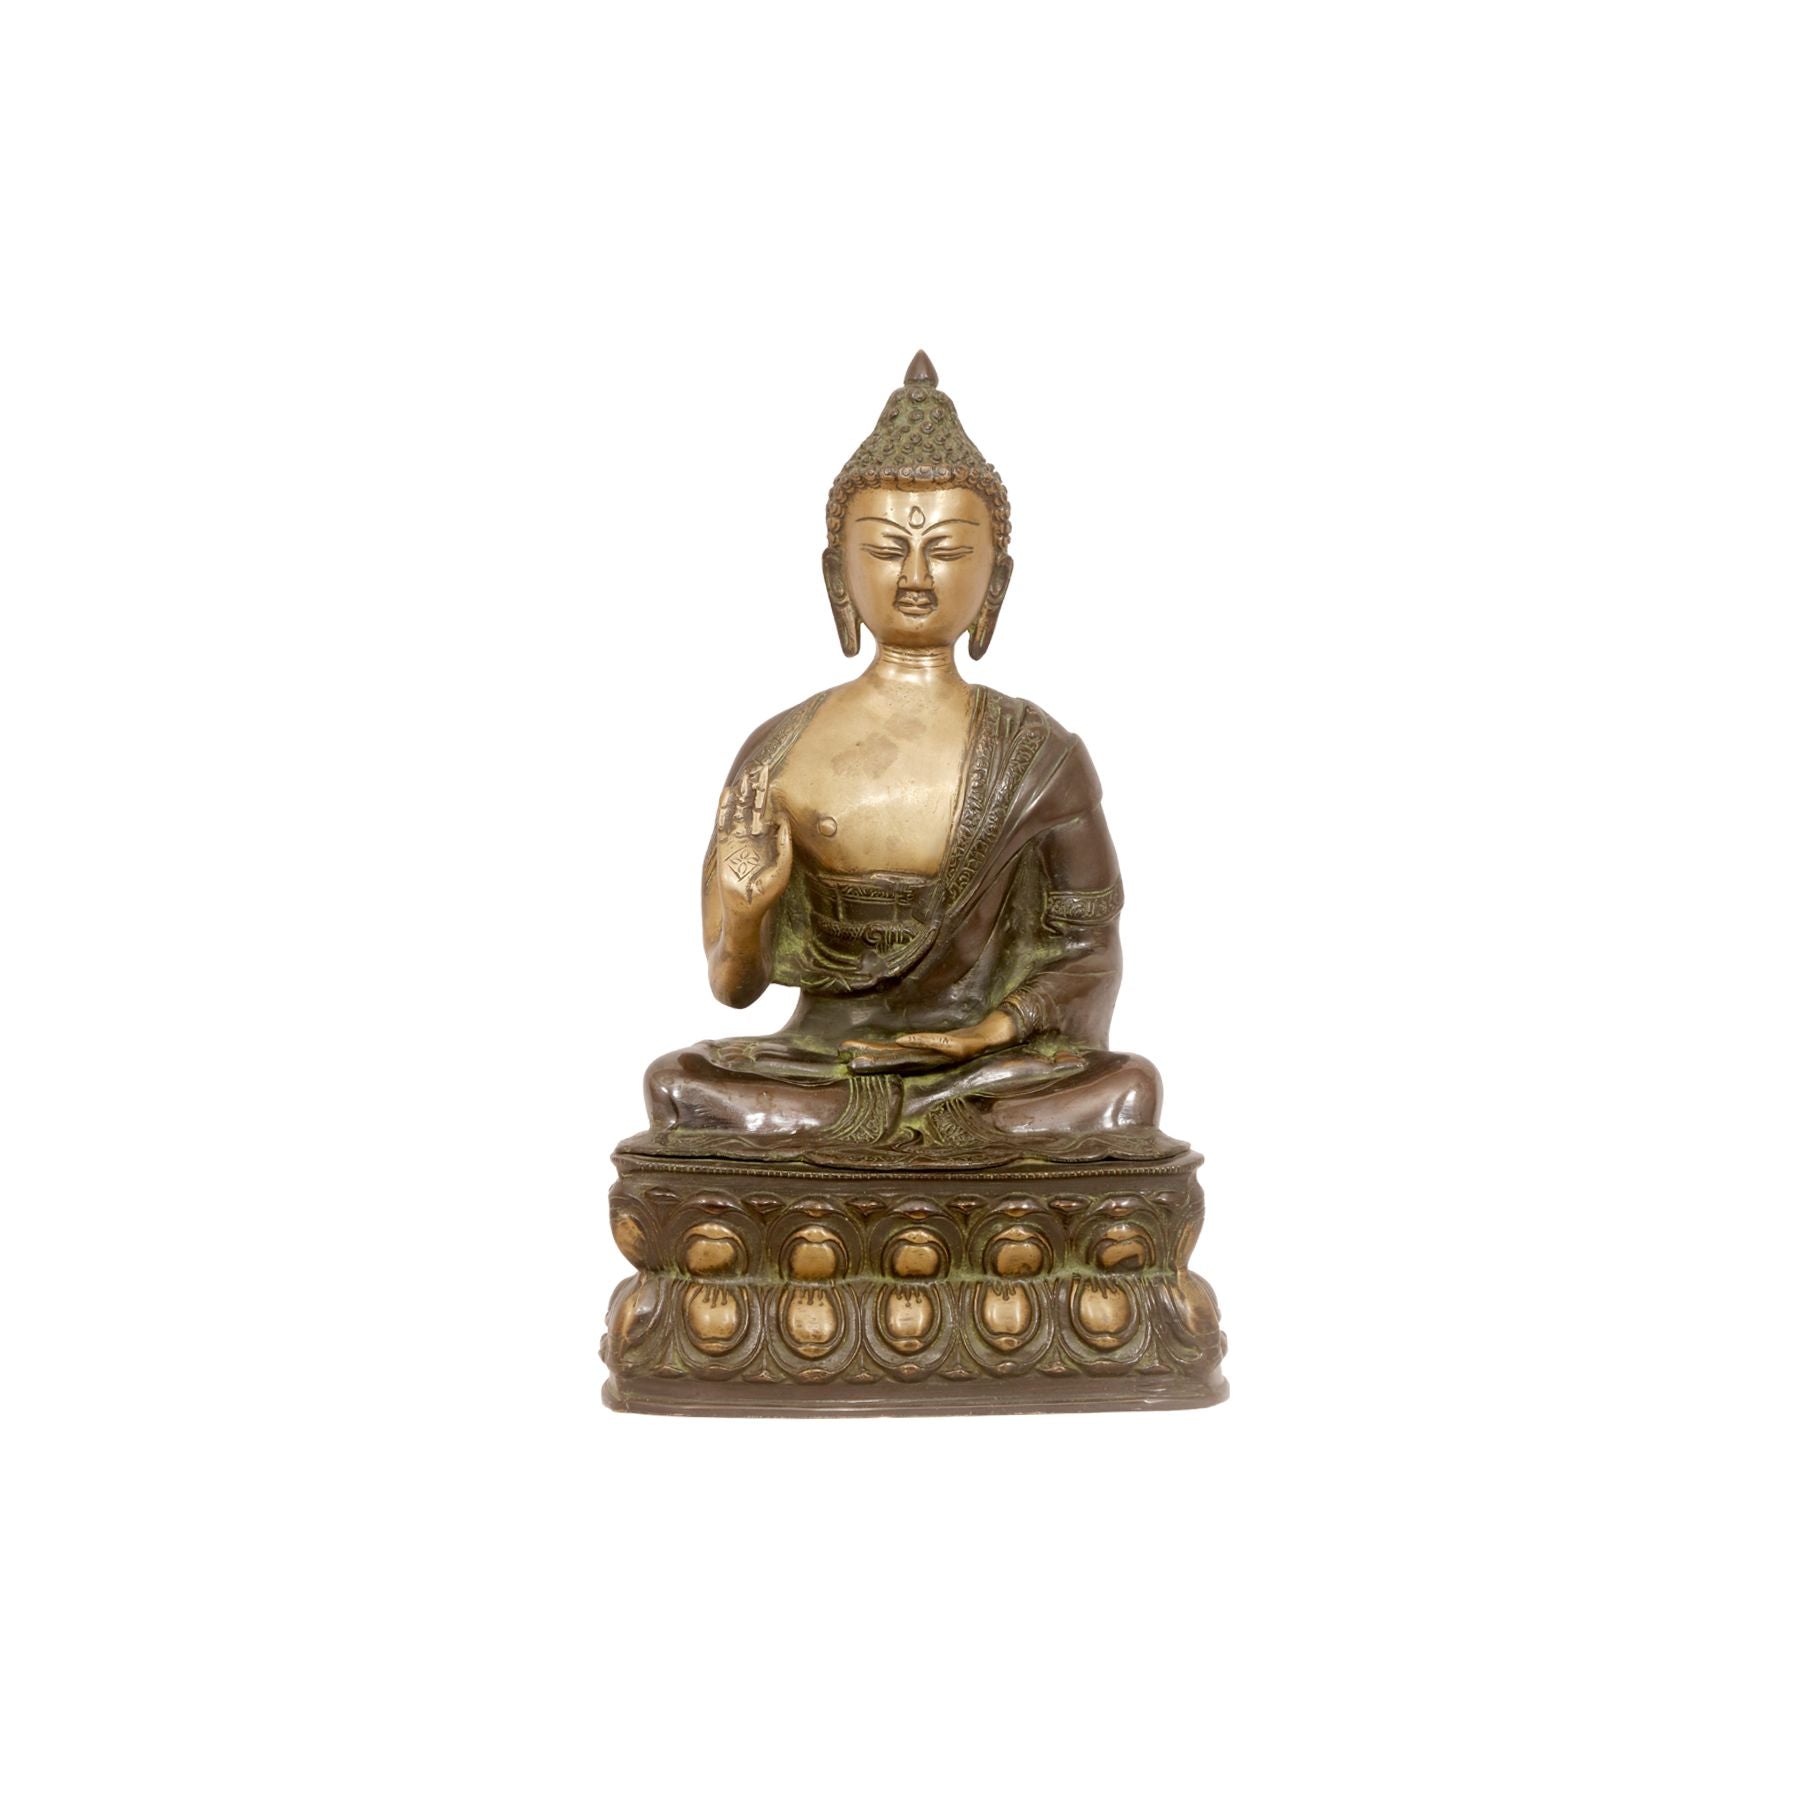 Antique Full Body Buddha Statue – 4kg Statue